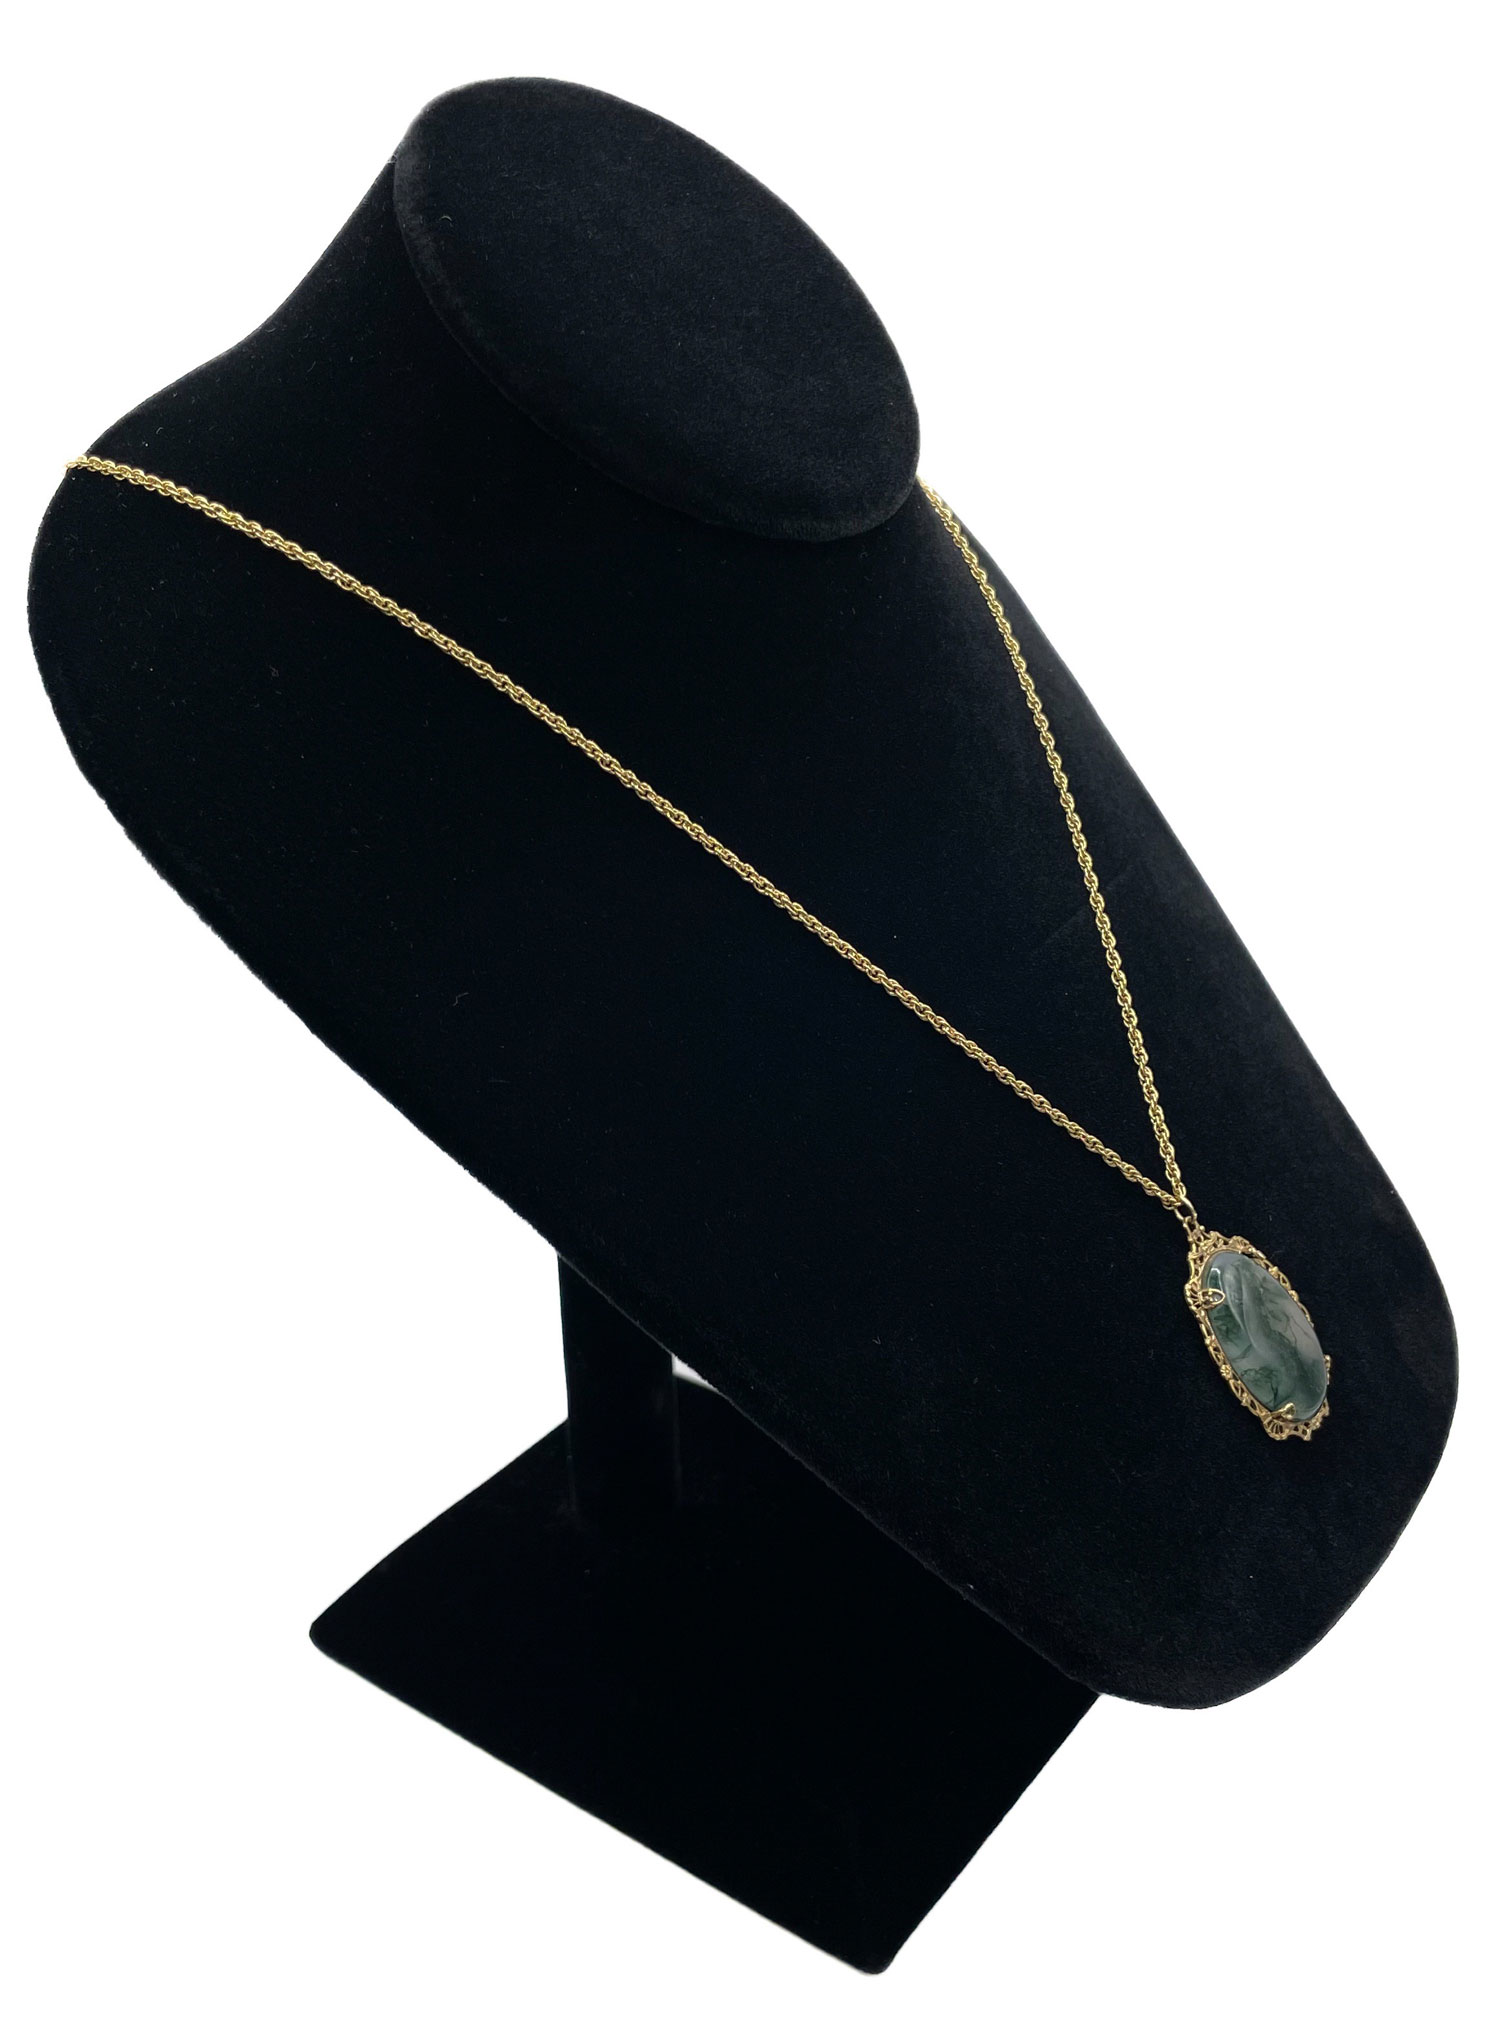 Art Deco dentrite agate pendant necklace